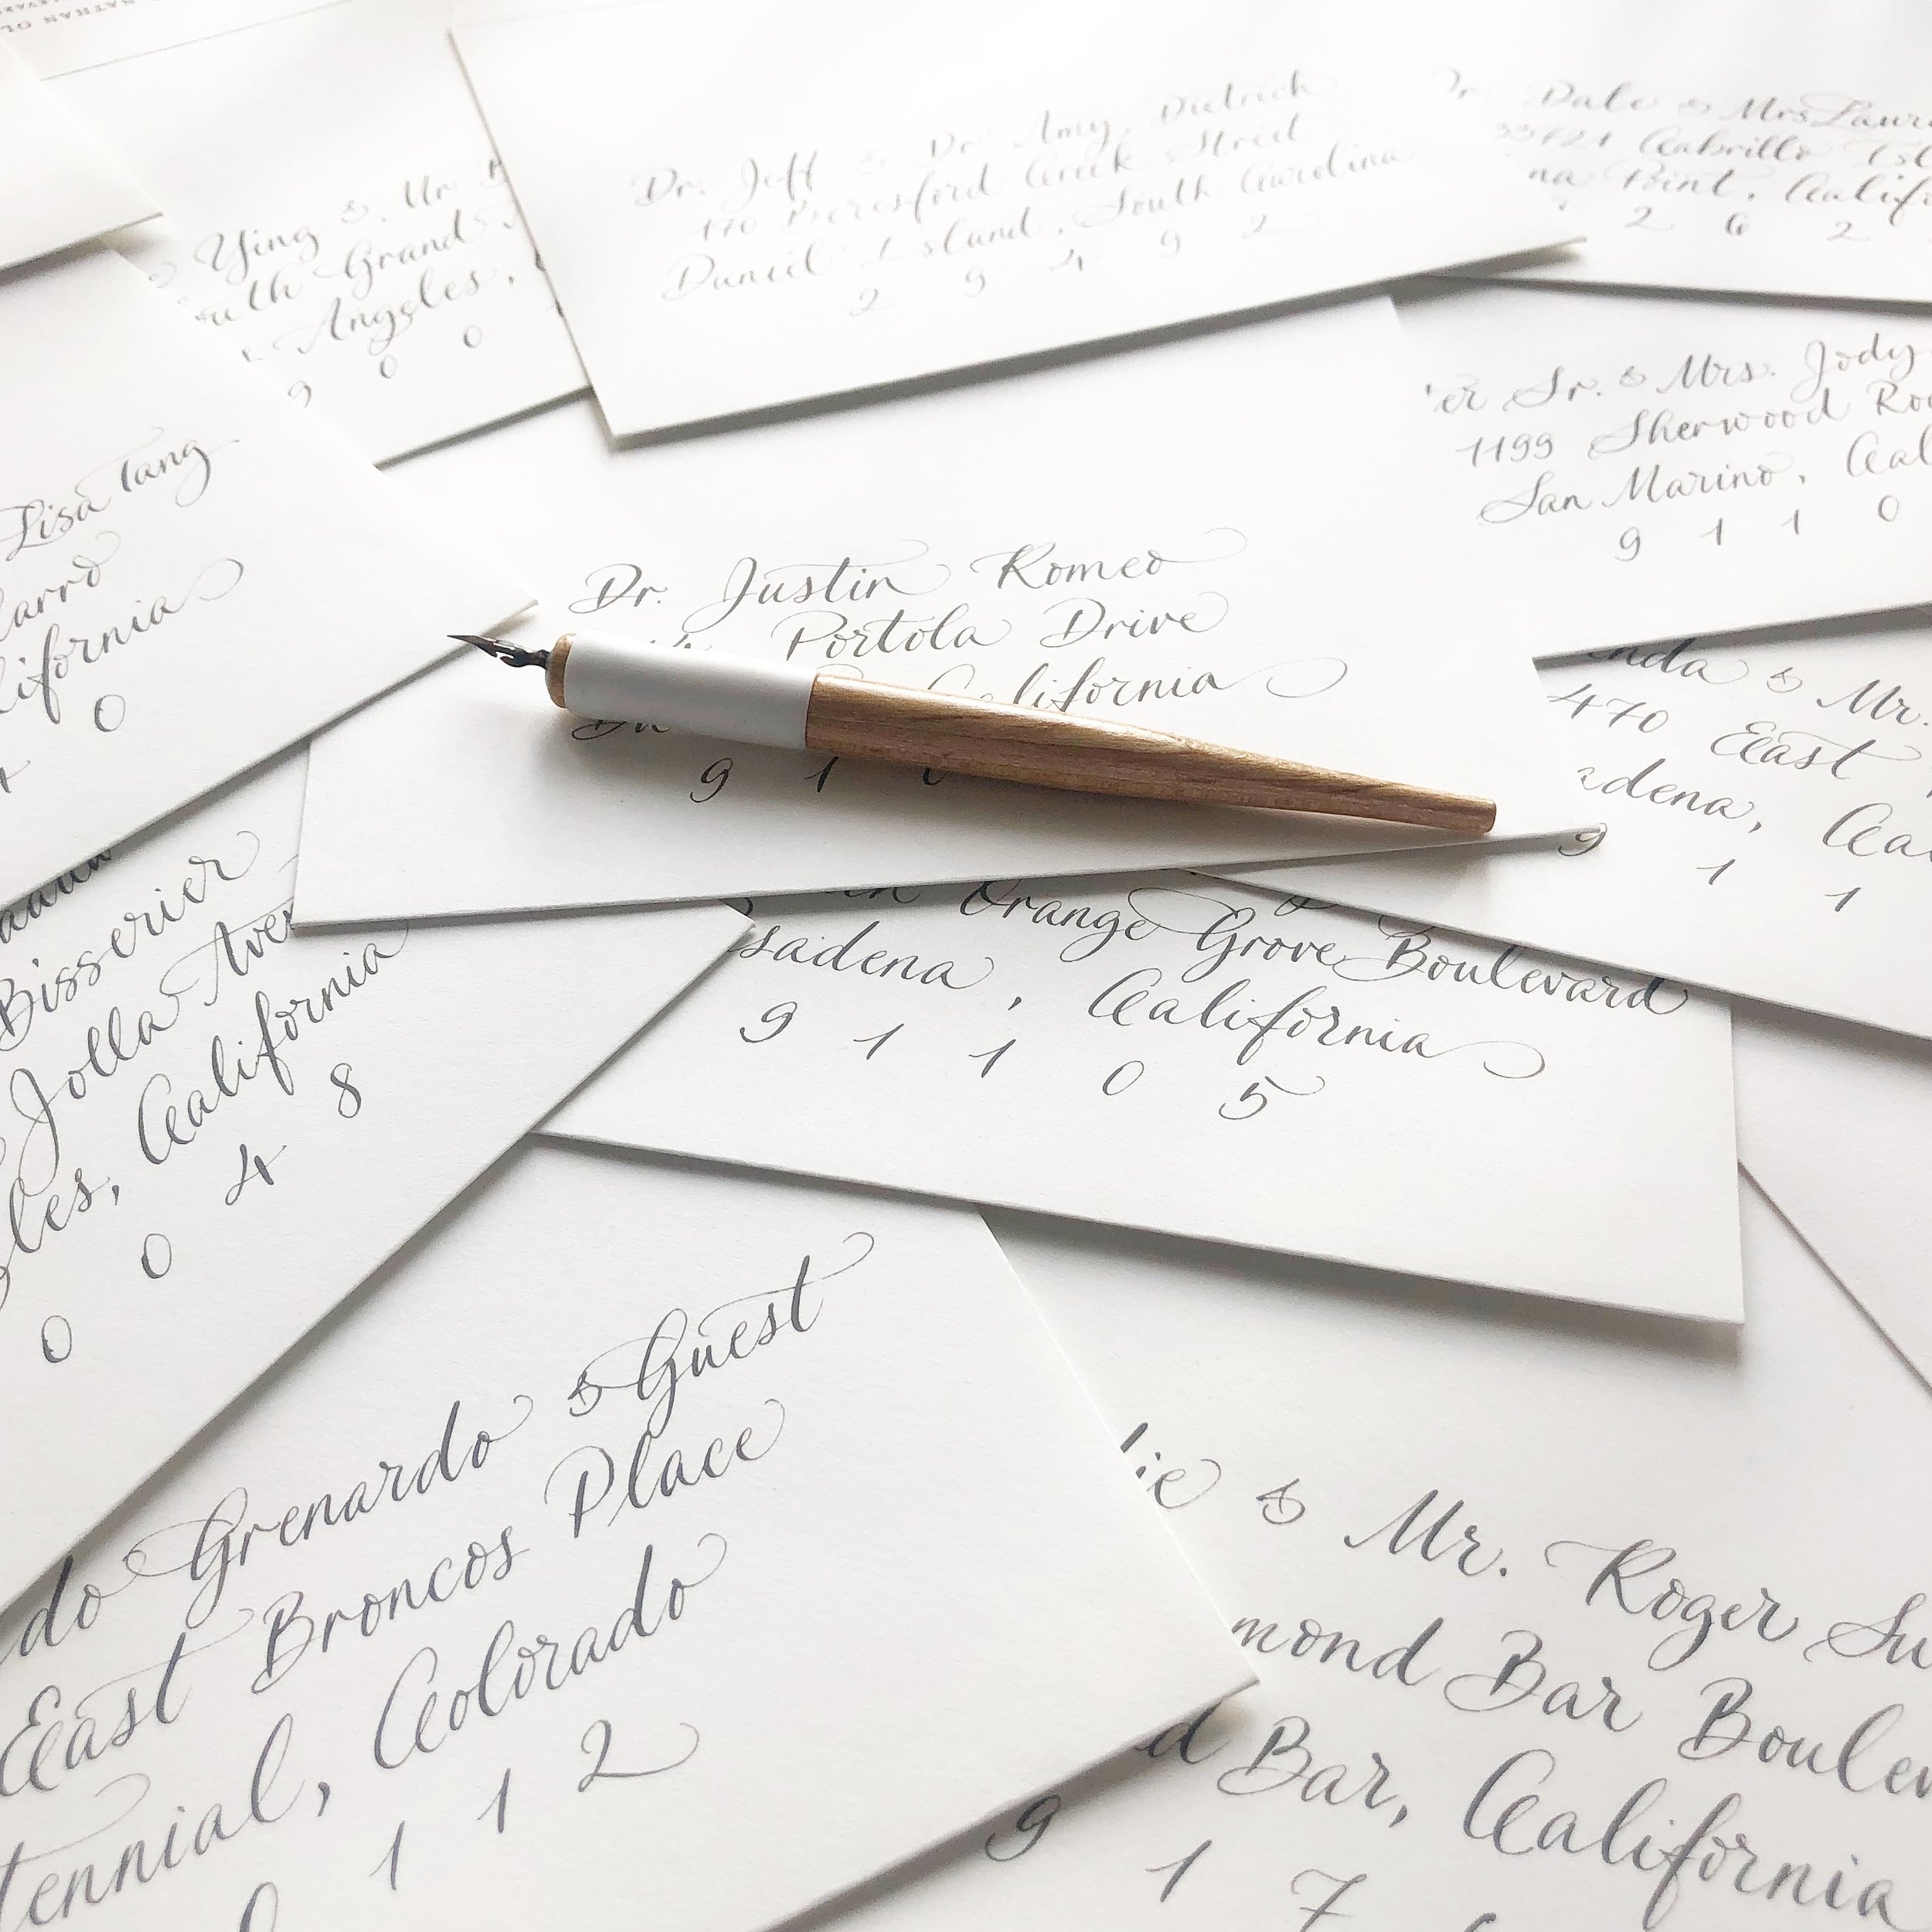 Addressed envelopes in calligraphy